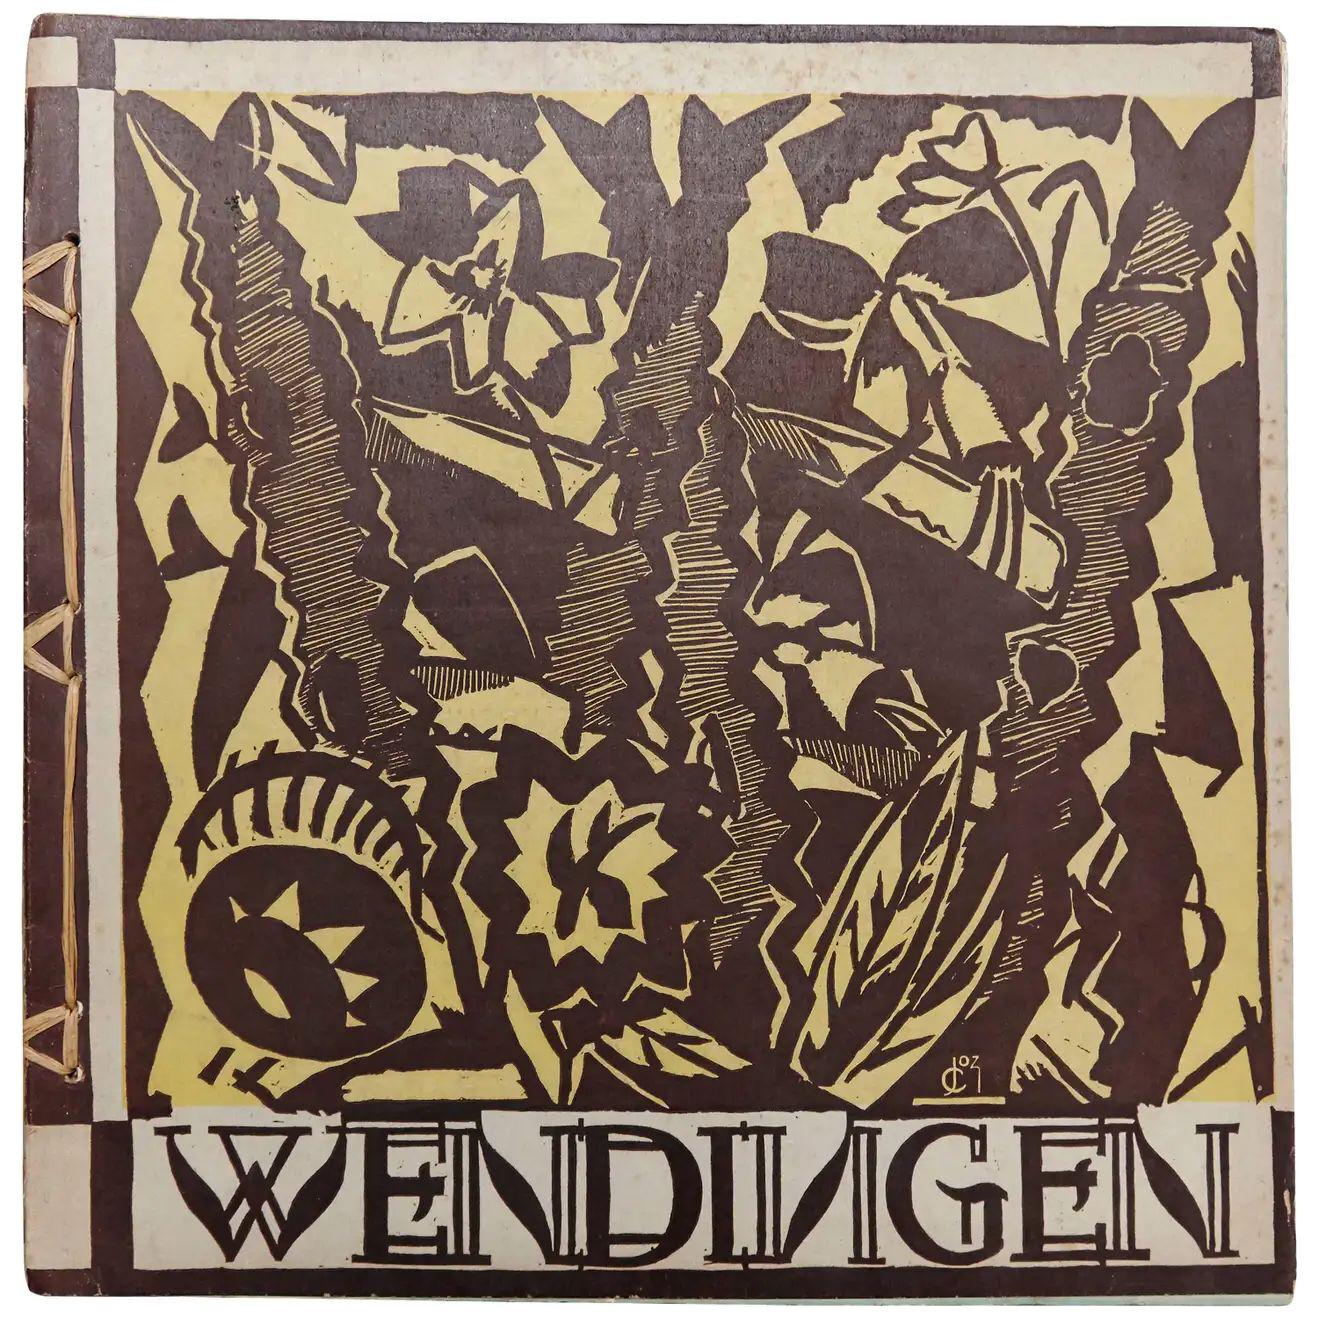 Wendingen, Issue 5, Cover by Josef Cantré, 1920